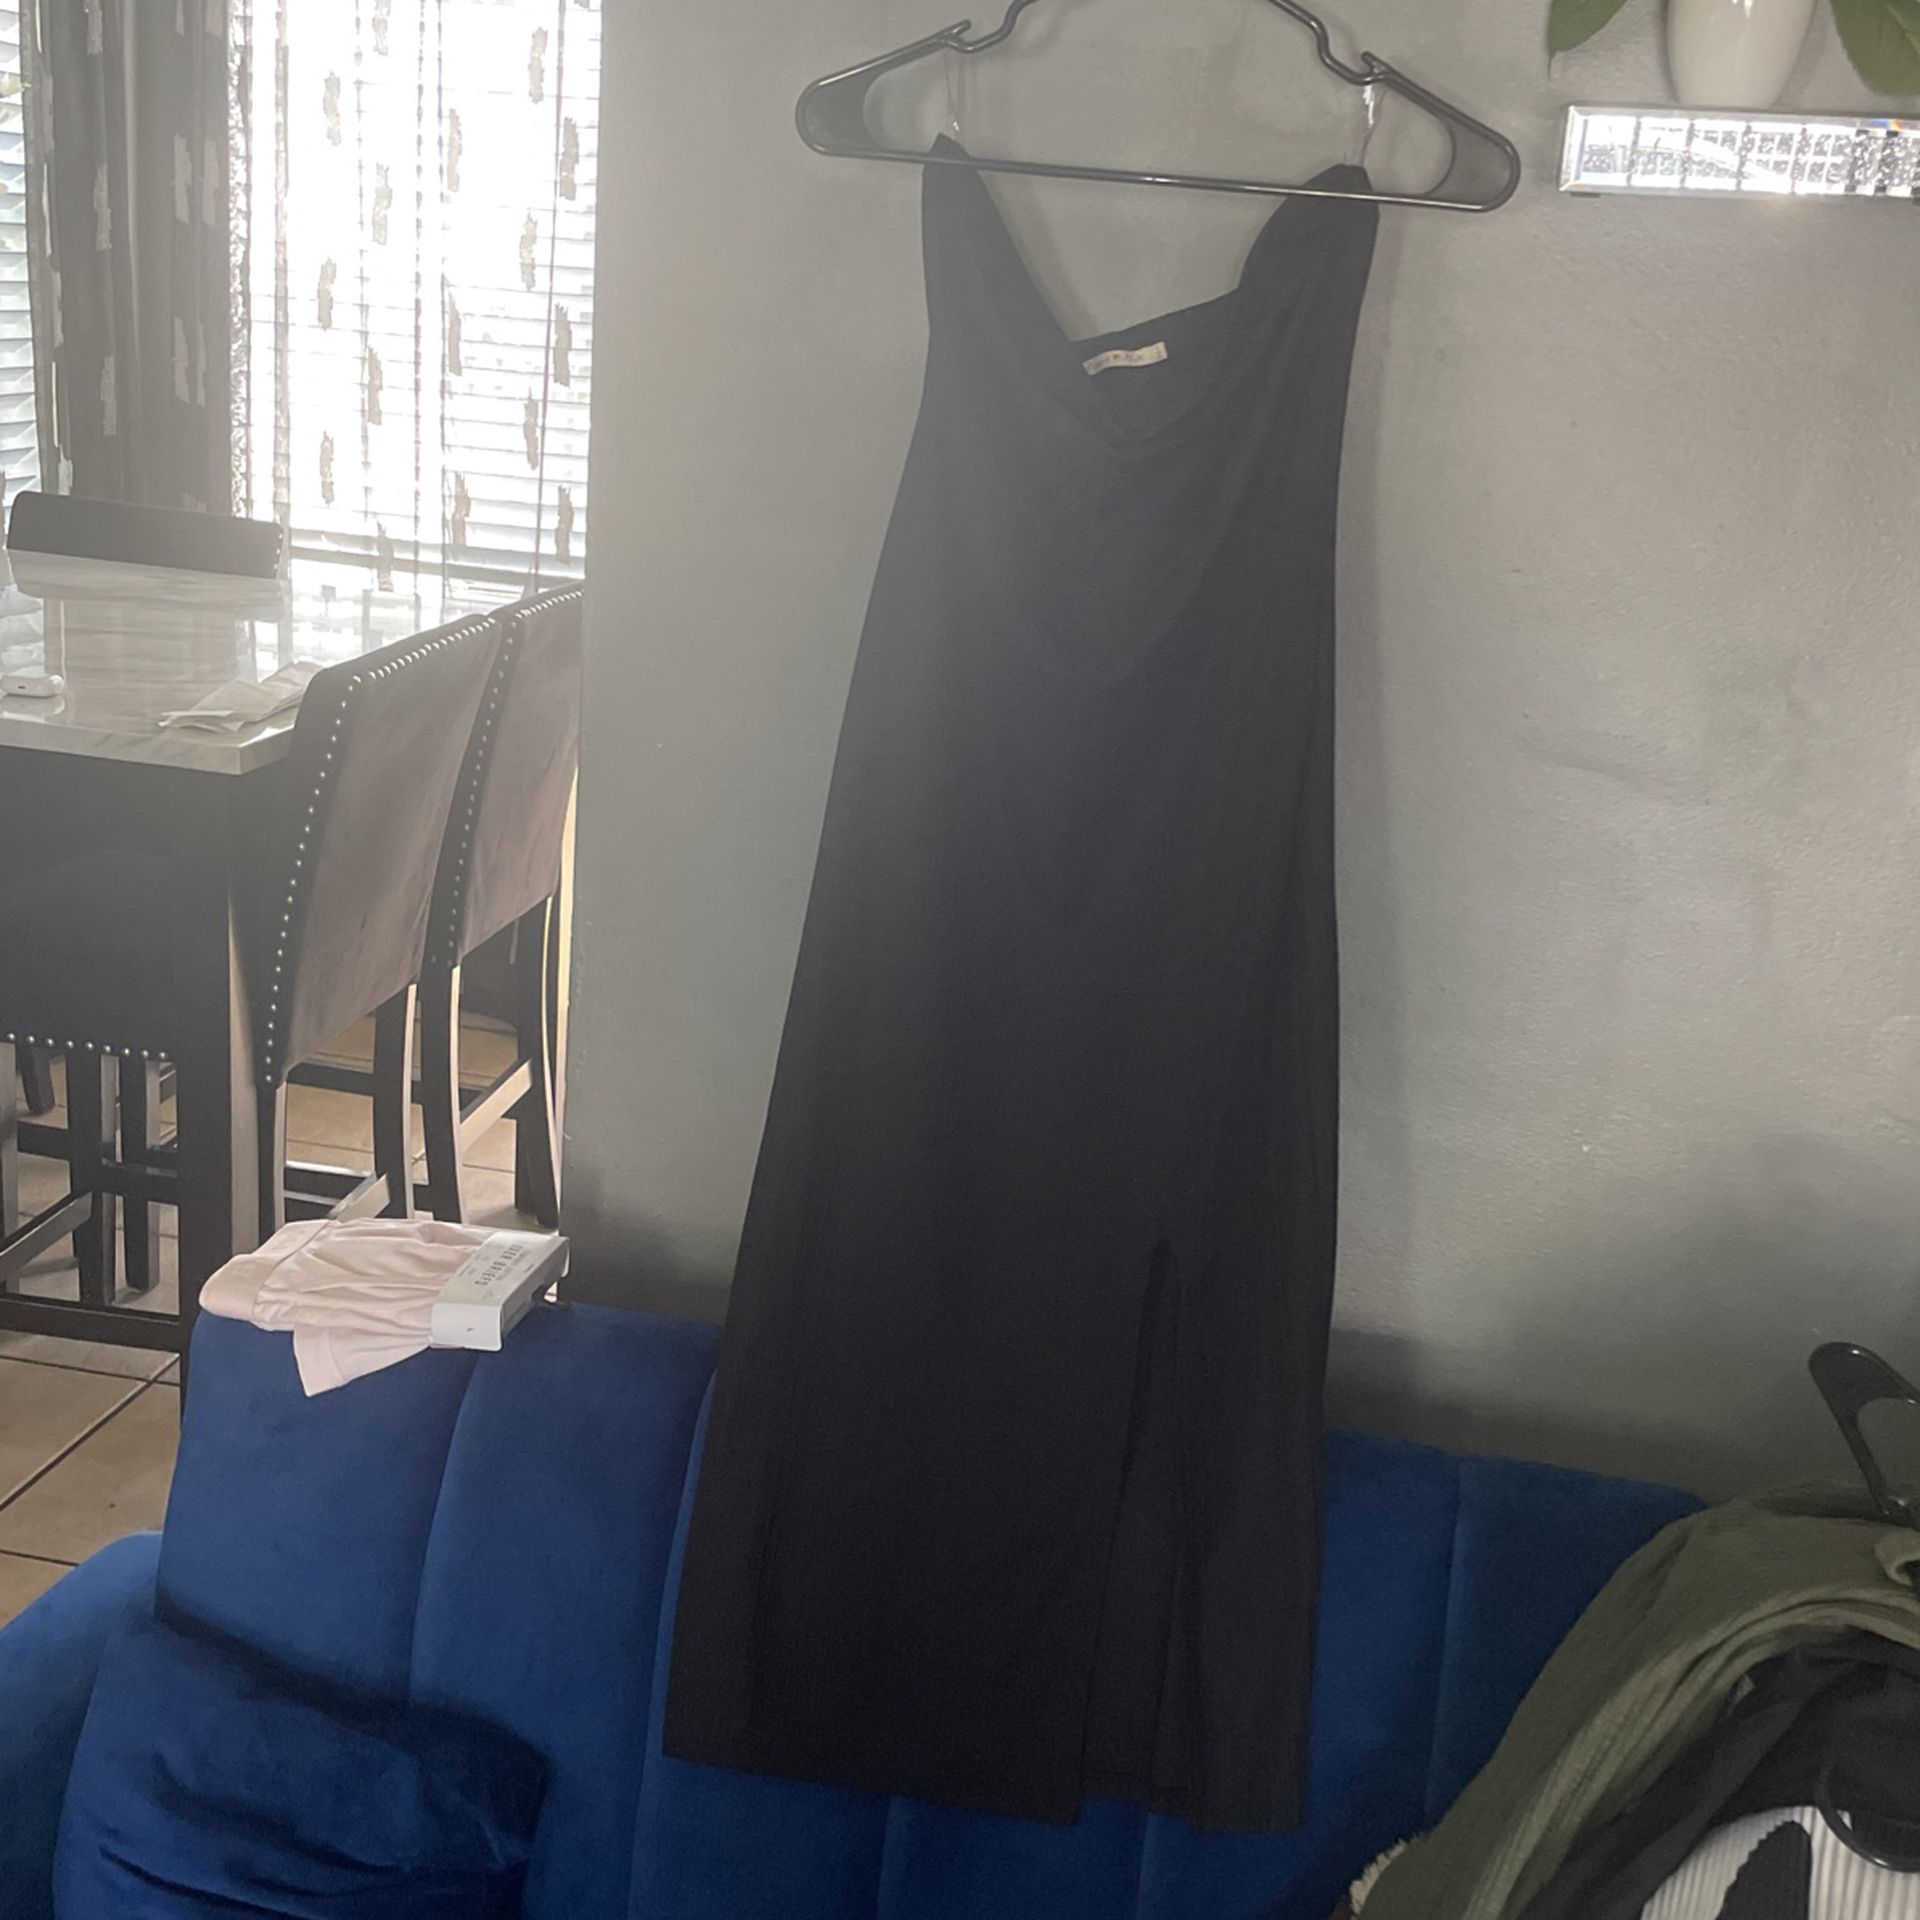 Strapless Long Black Dress Large